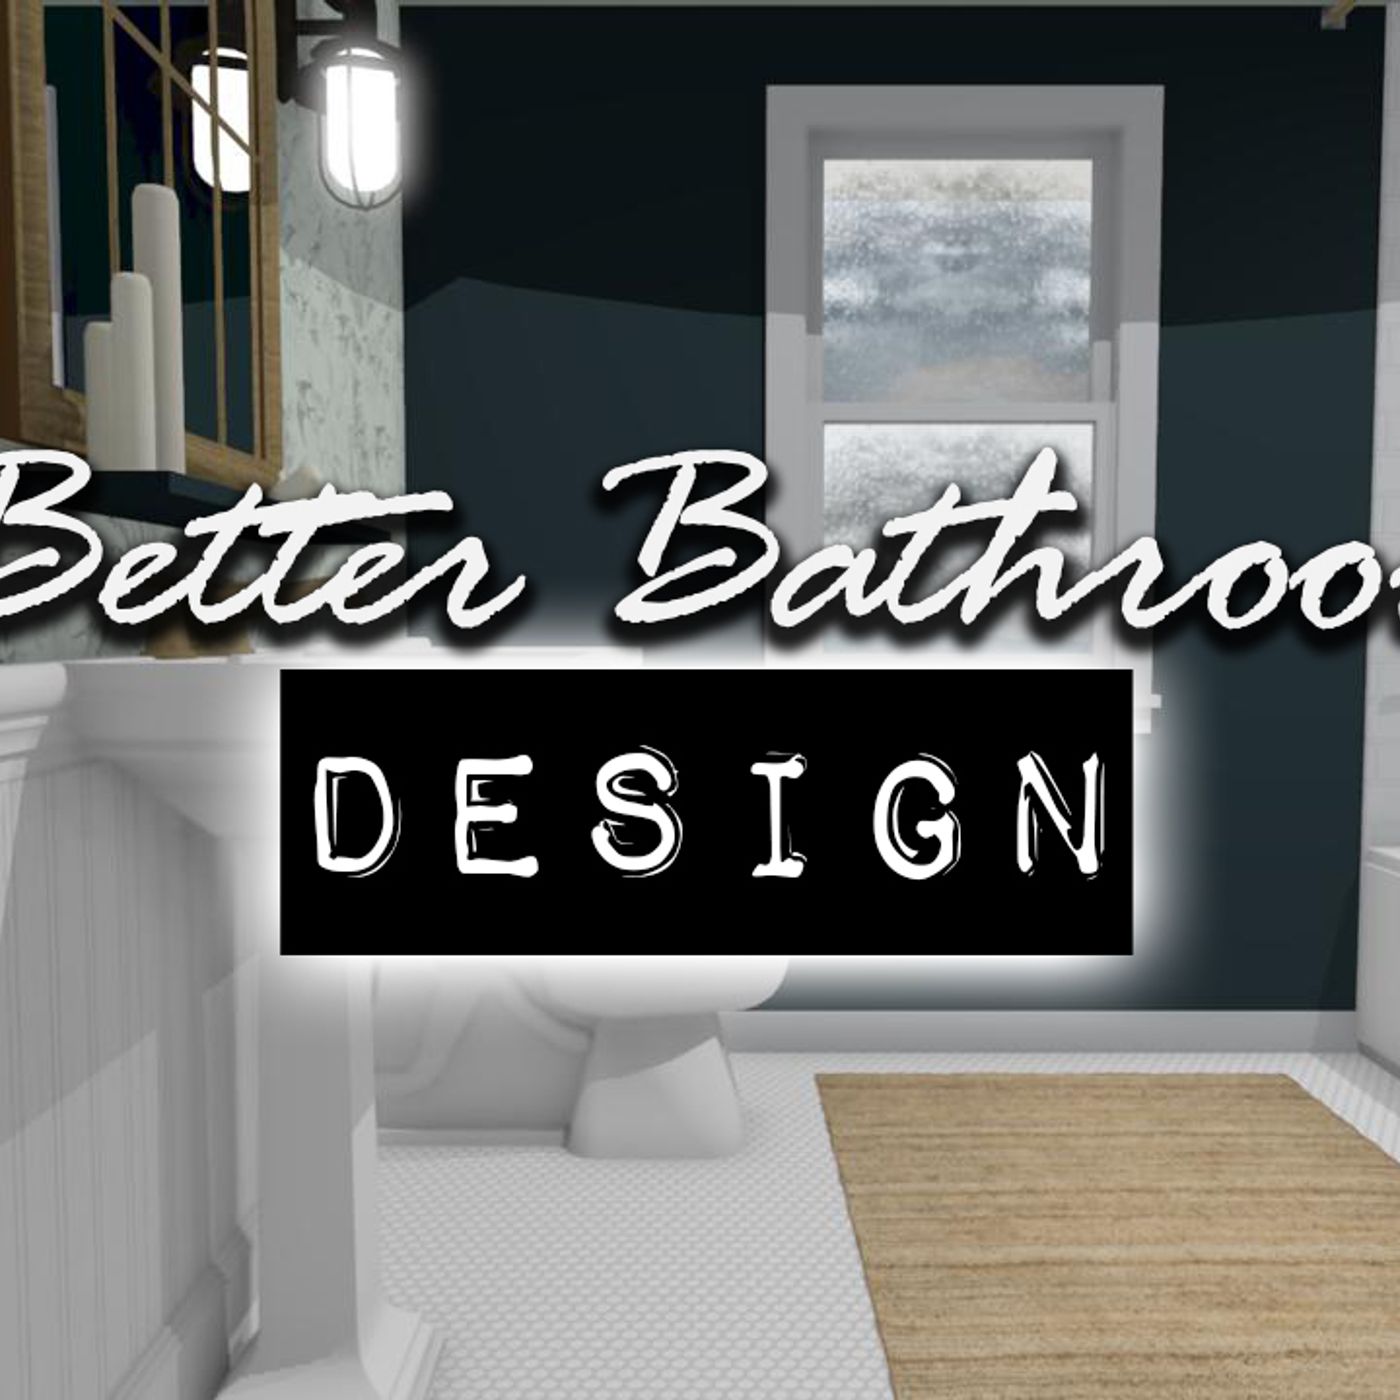 Better Bathroom Design | Home Improvement Ideas & DIY